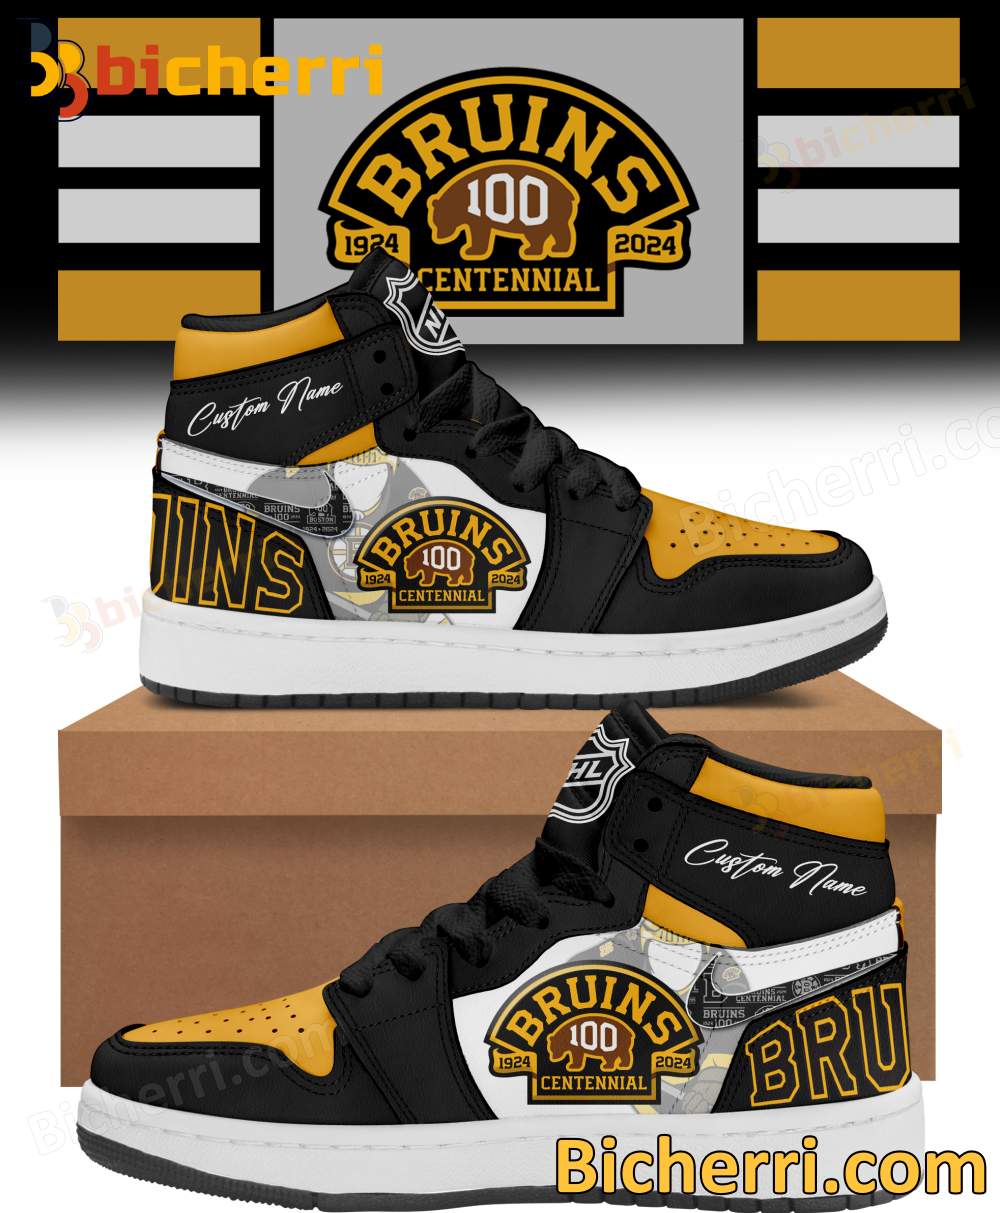 Boston Bruins Bear Air Jordan High Top Shoes